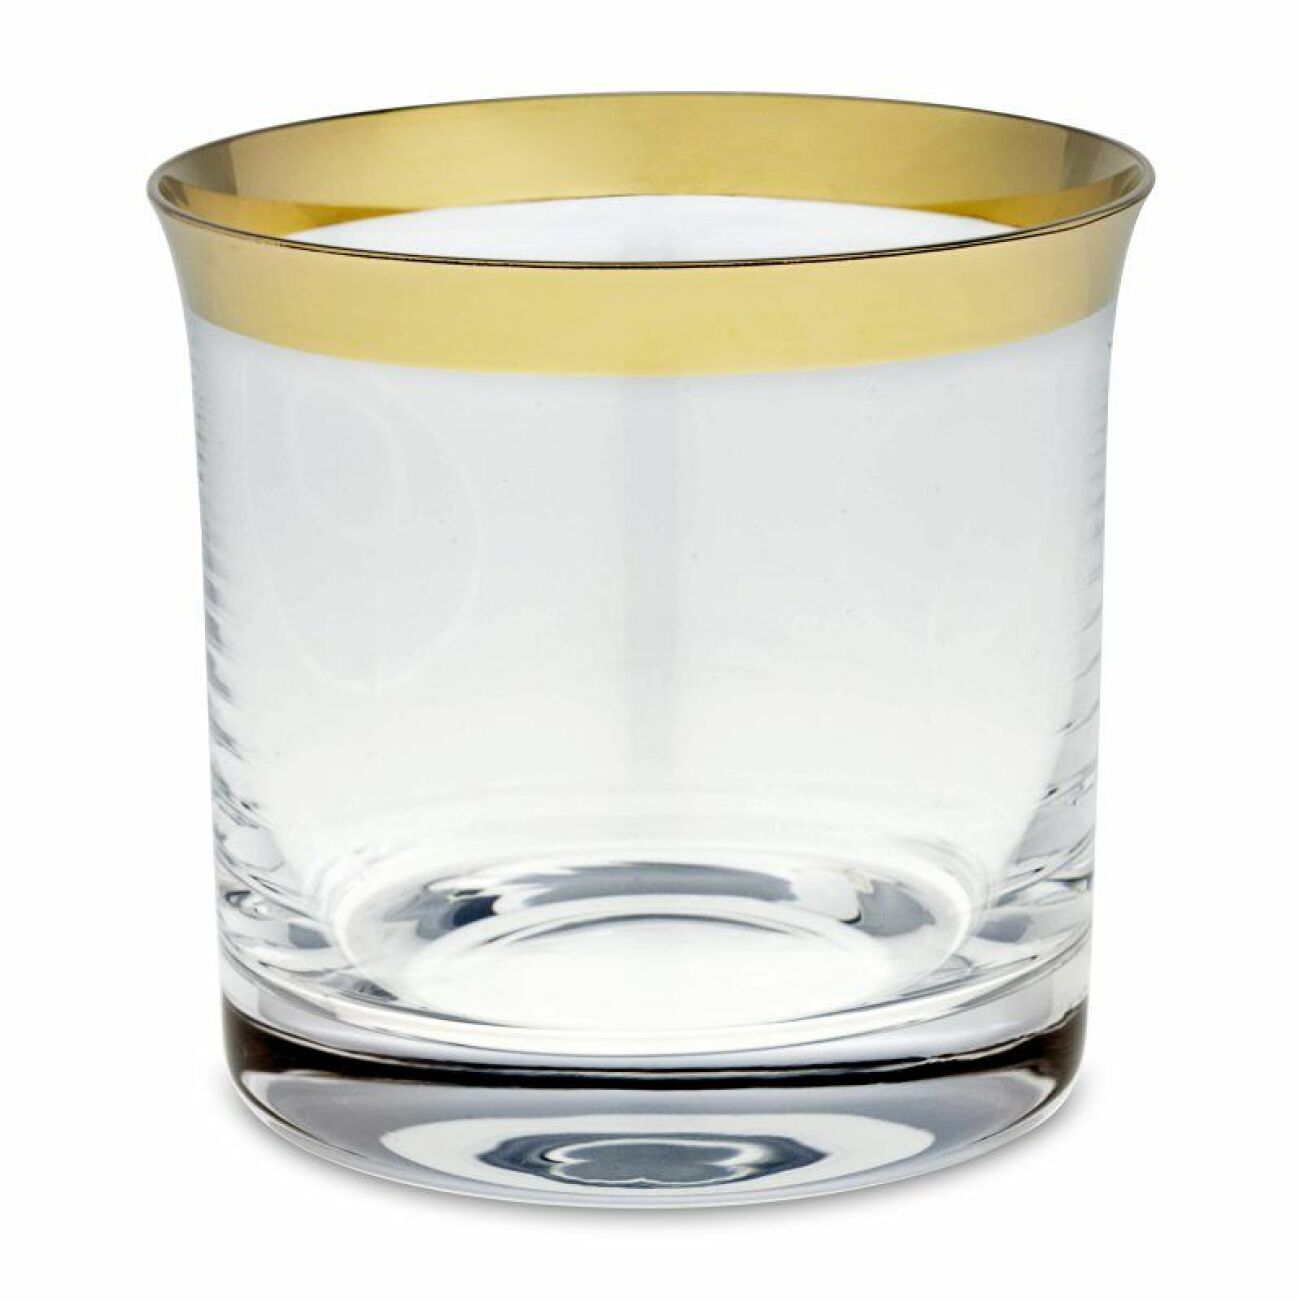 Vatten- eller whiskyglas, Svenskt tenn.